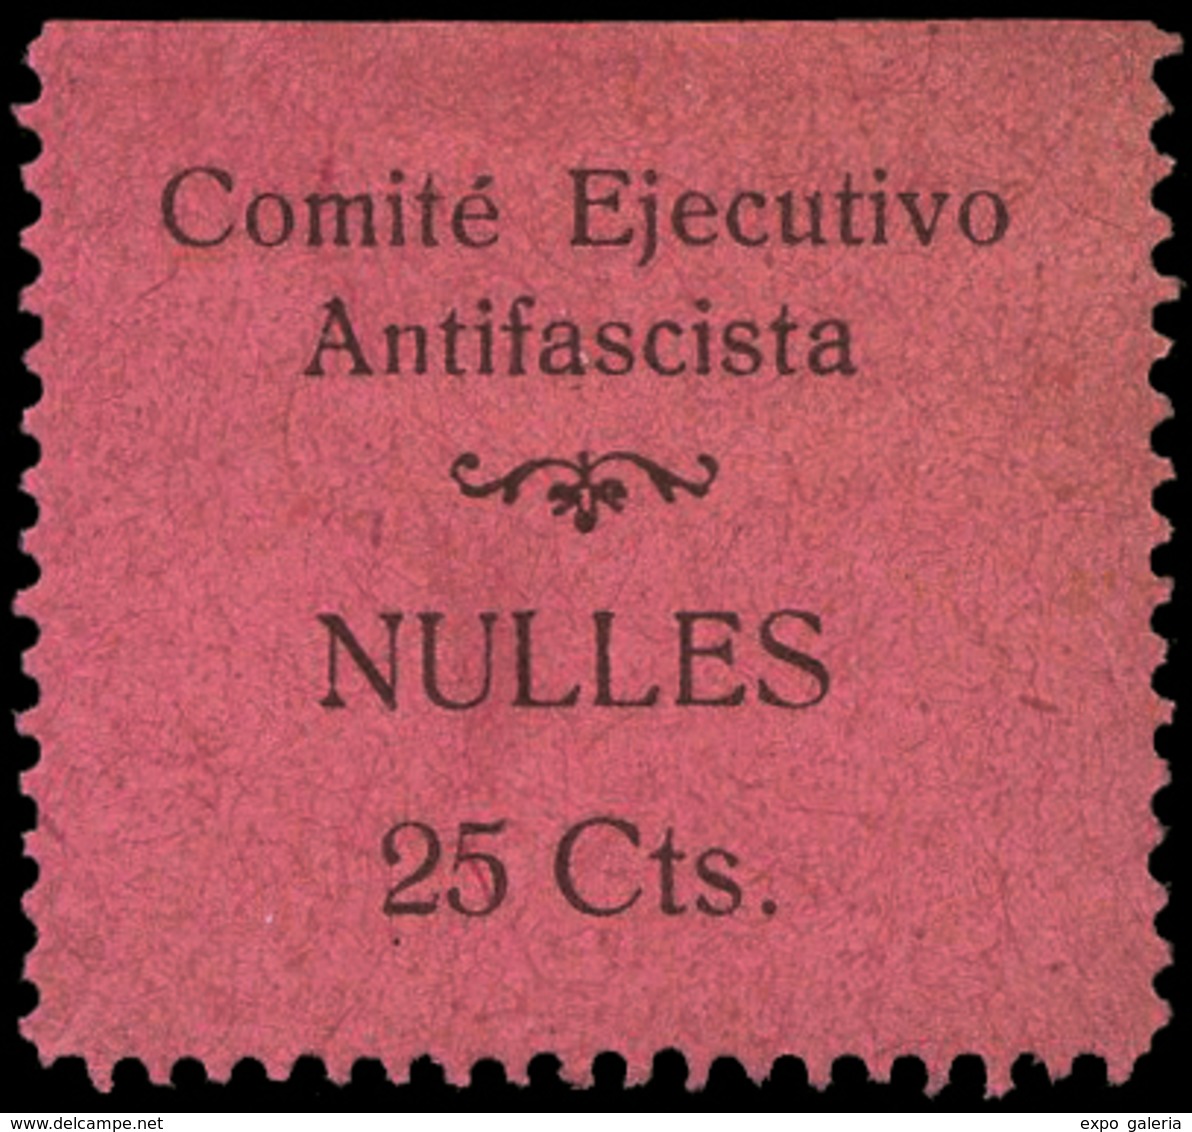 All. ** 3 - Tarragona. NULLES. “Comité Ejecutivo Antifascista. 25 Cts.” Lujo. Raro - Republican Issues